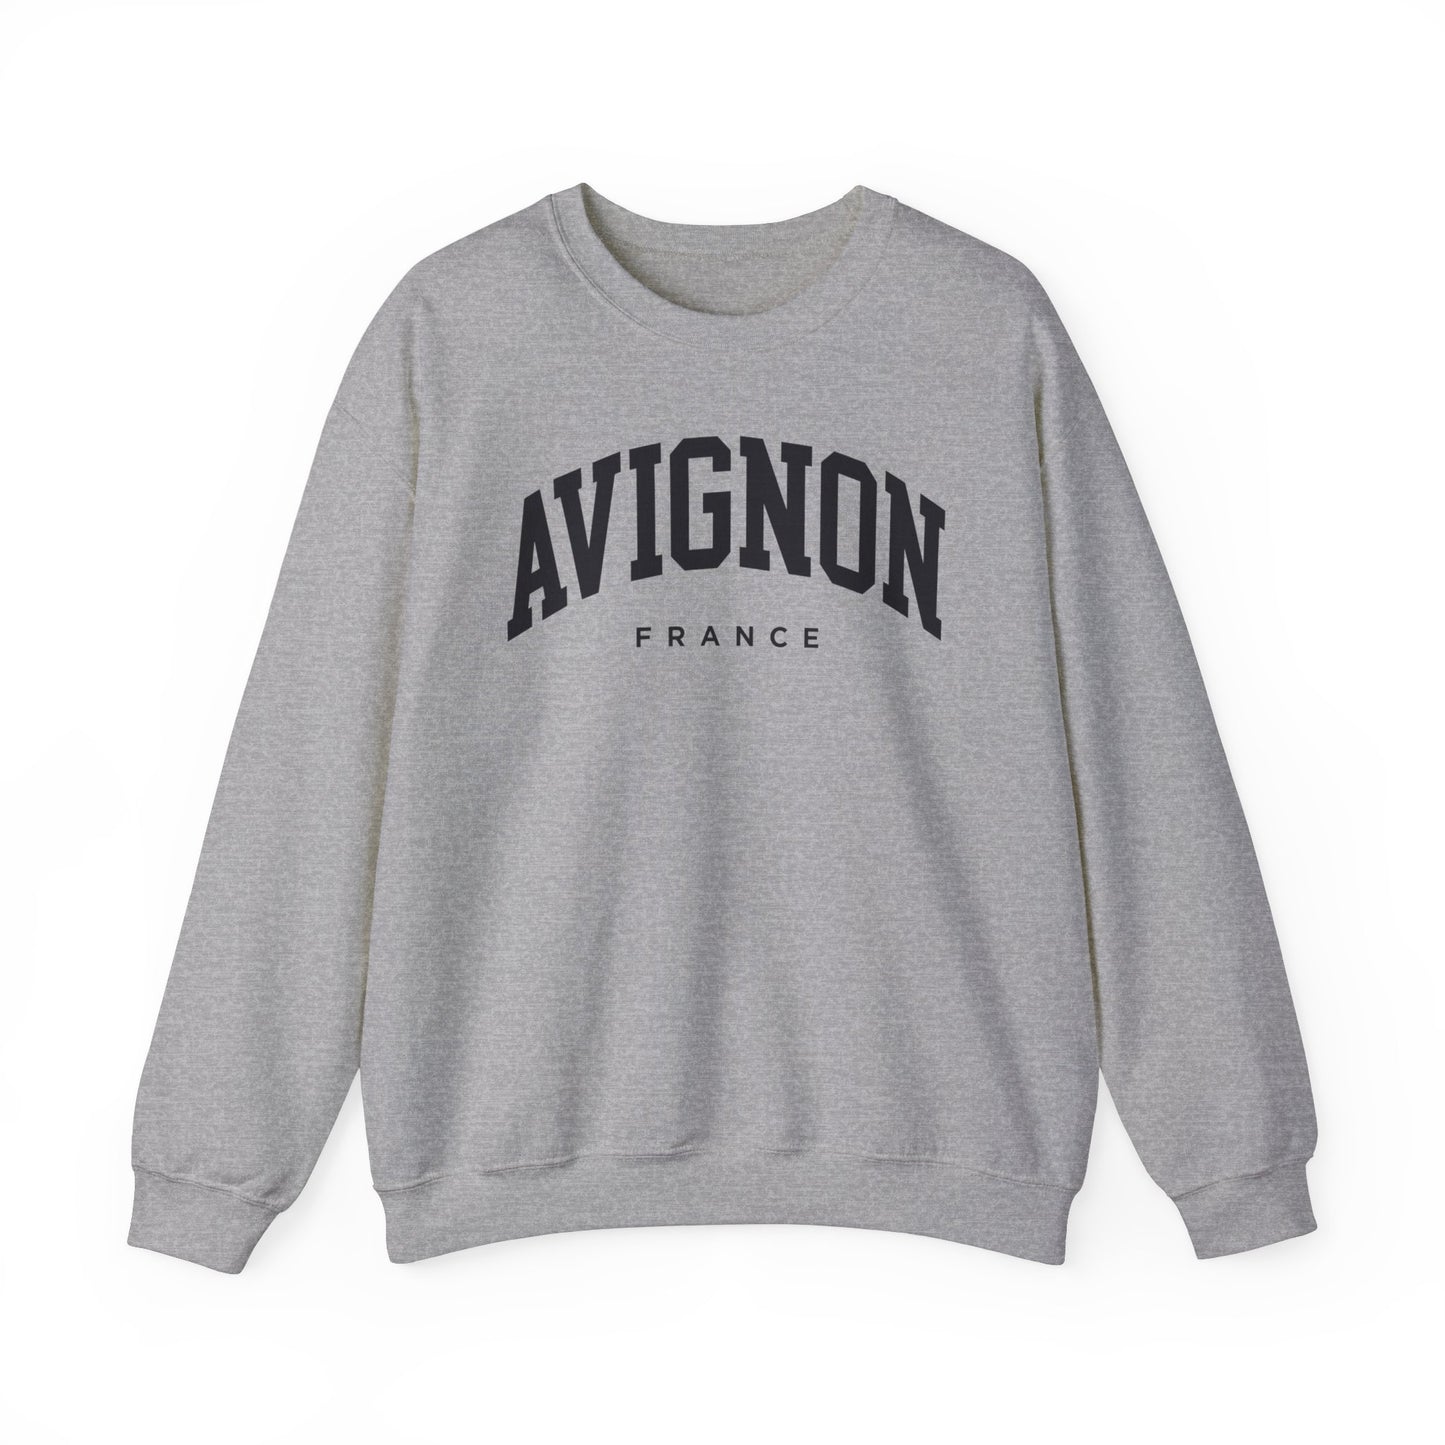 Avignon France Sweatshirt